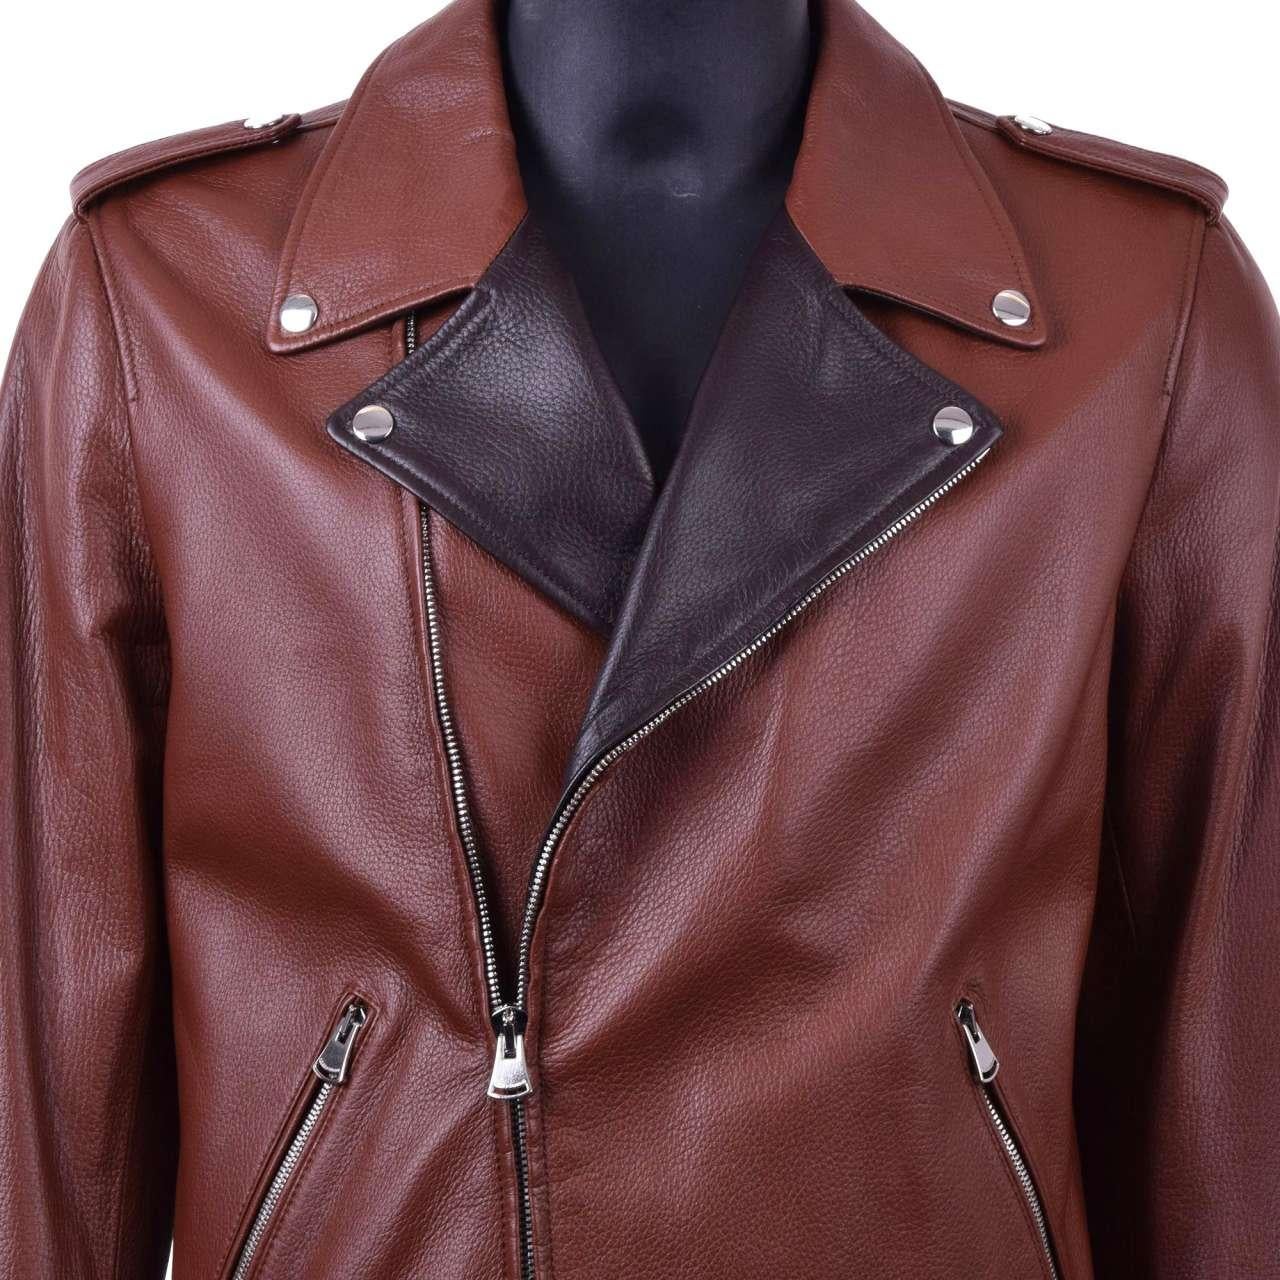 Dolce & Gabbana - Deer Leather Biker Jacket Brown In Excellent Condition For Sale In Erkrath, DE